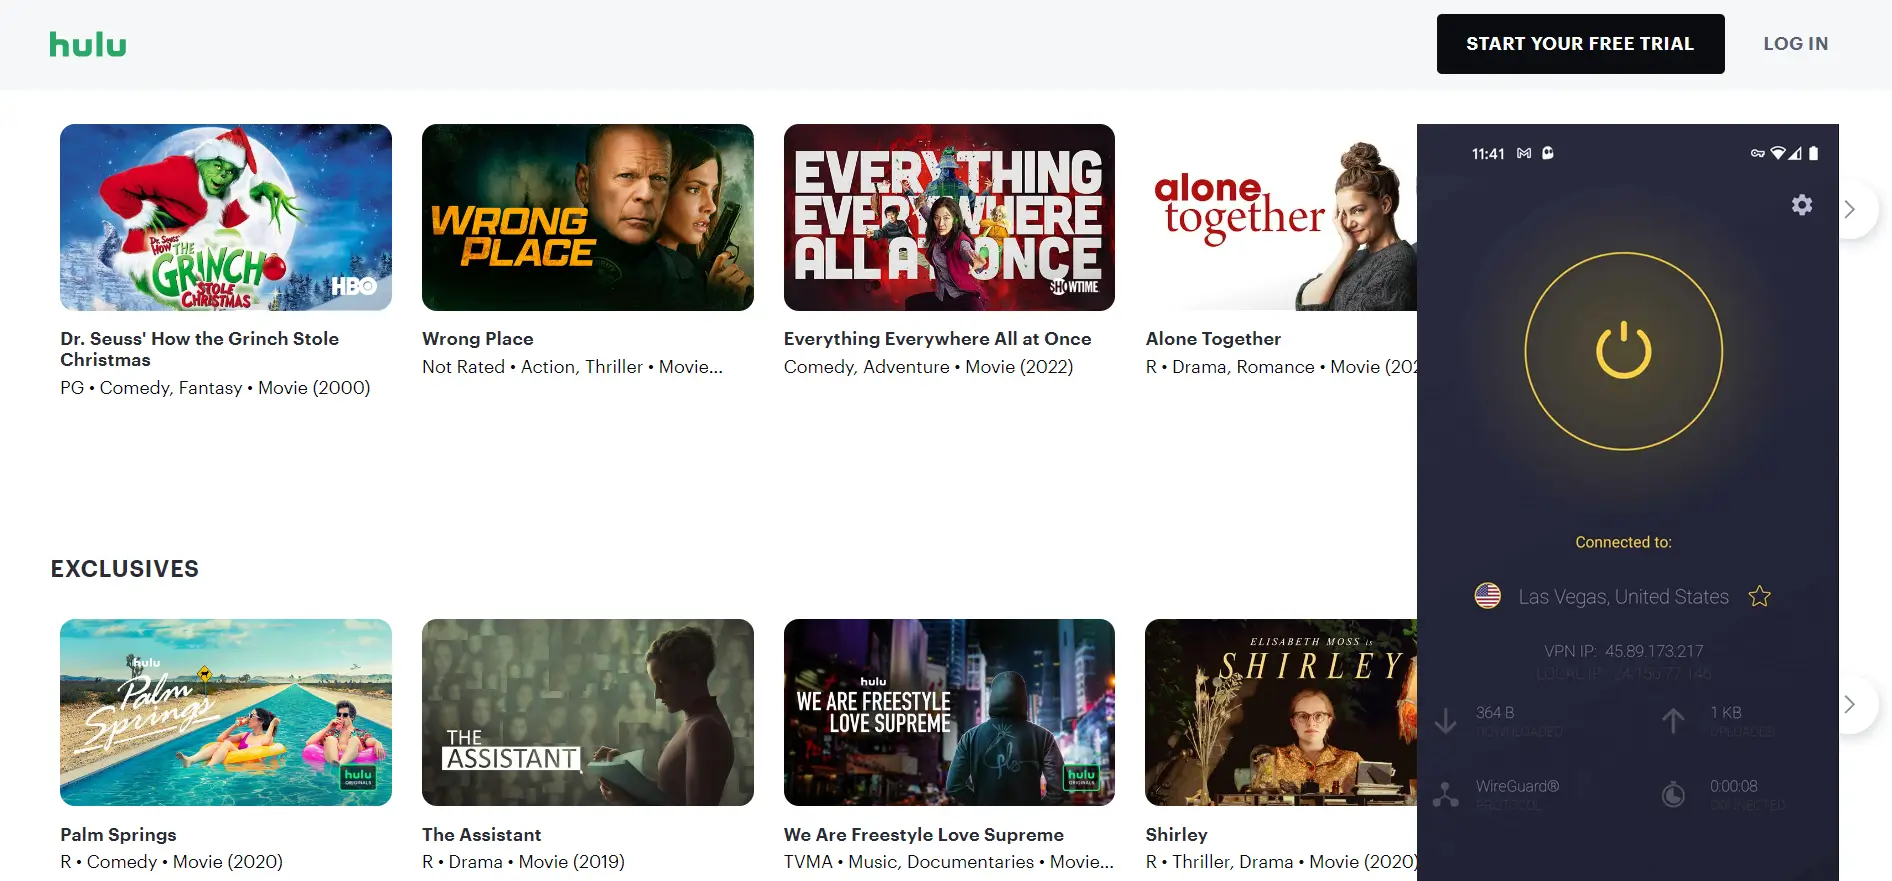 Hulu on lg smart tv with cyberghost